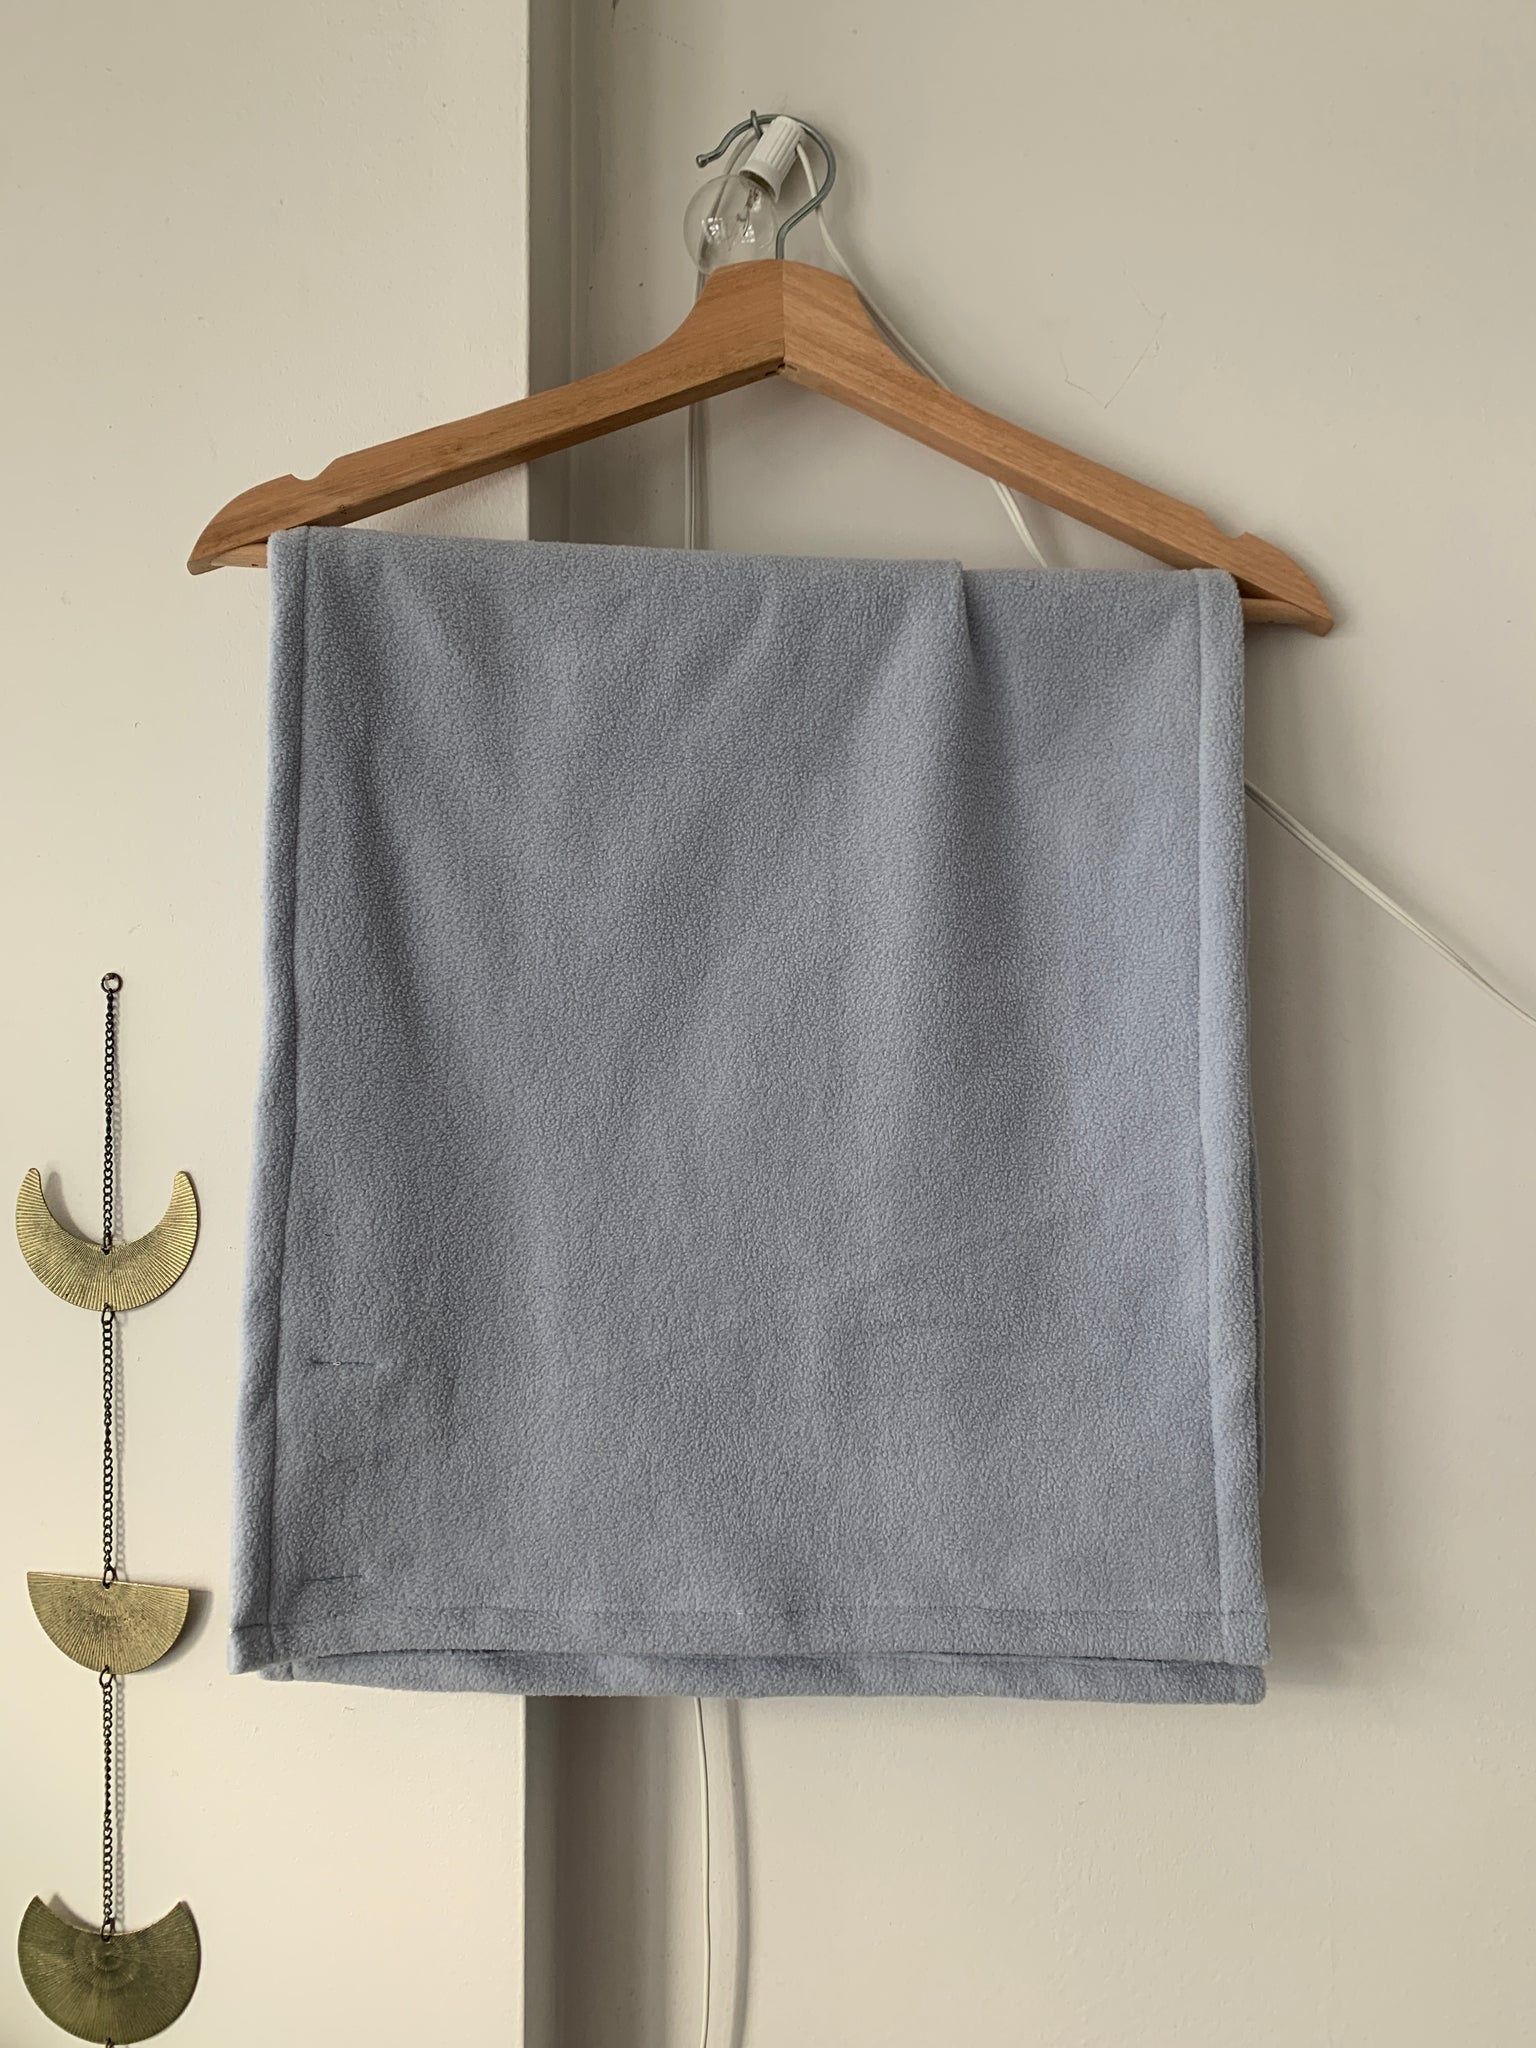 pale blue fleece scarf hanging folded on a hanger